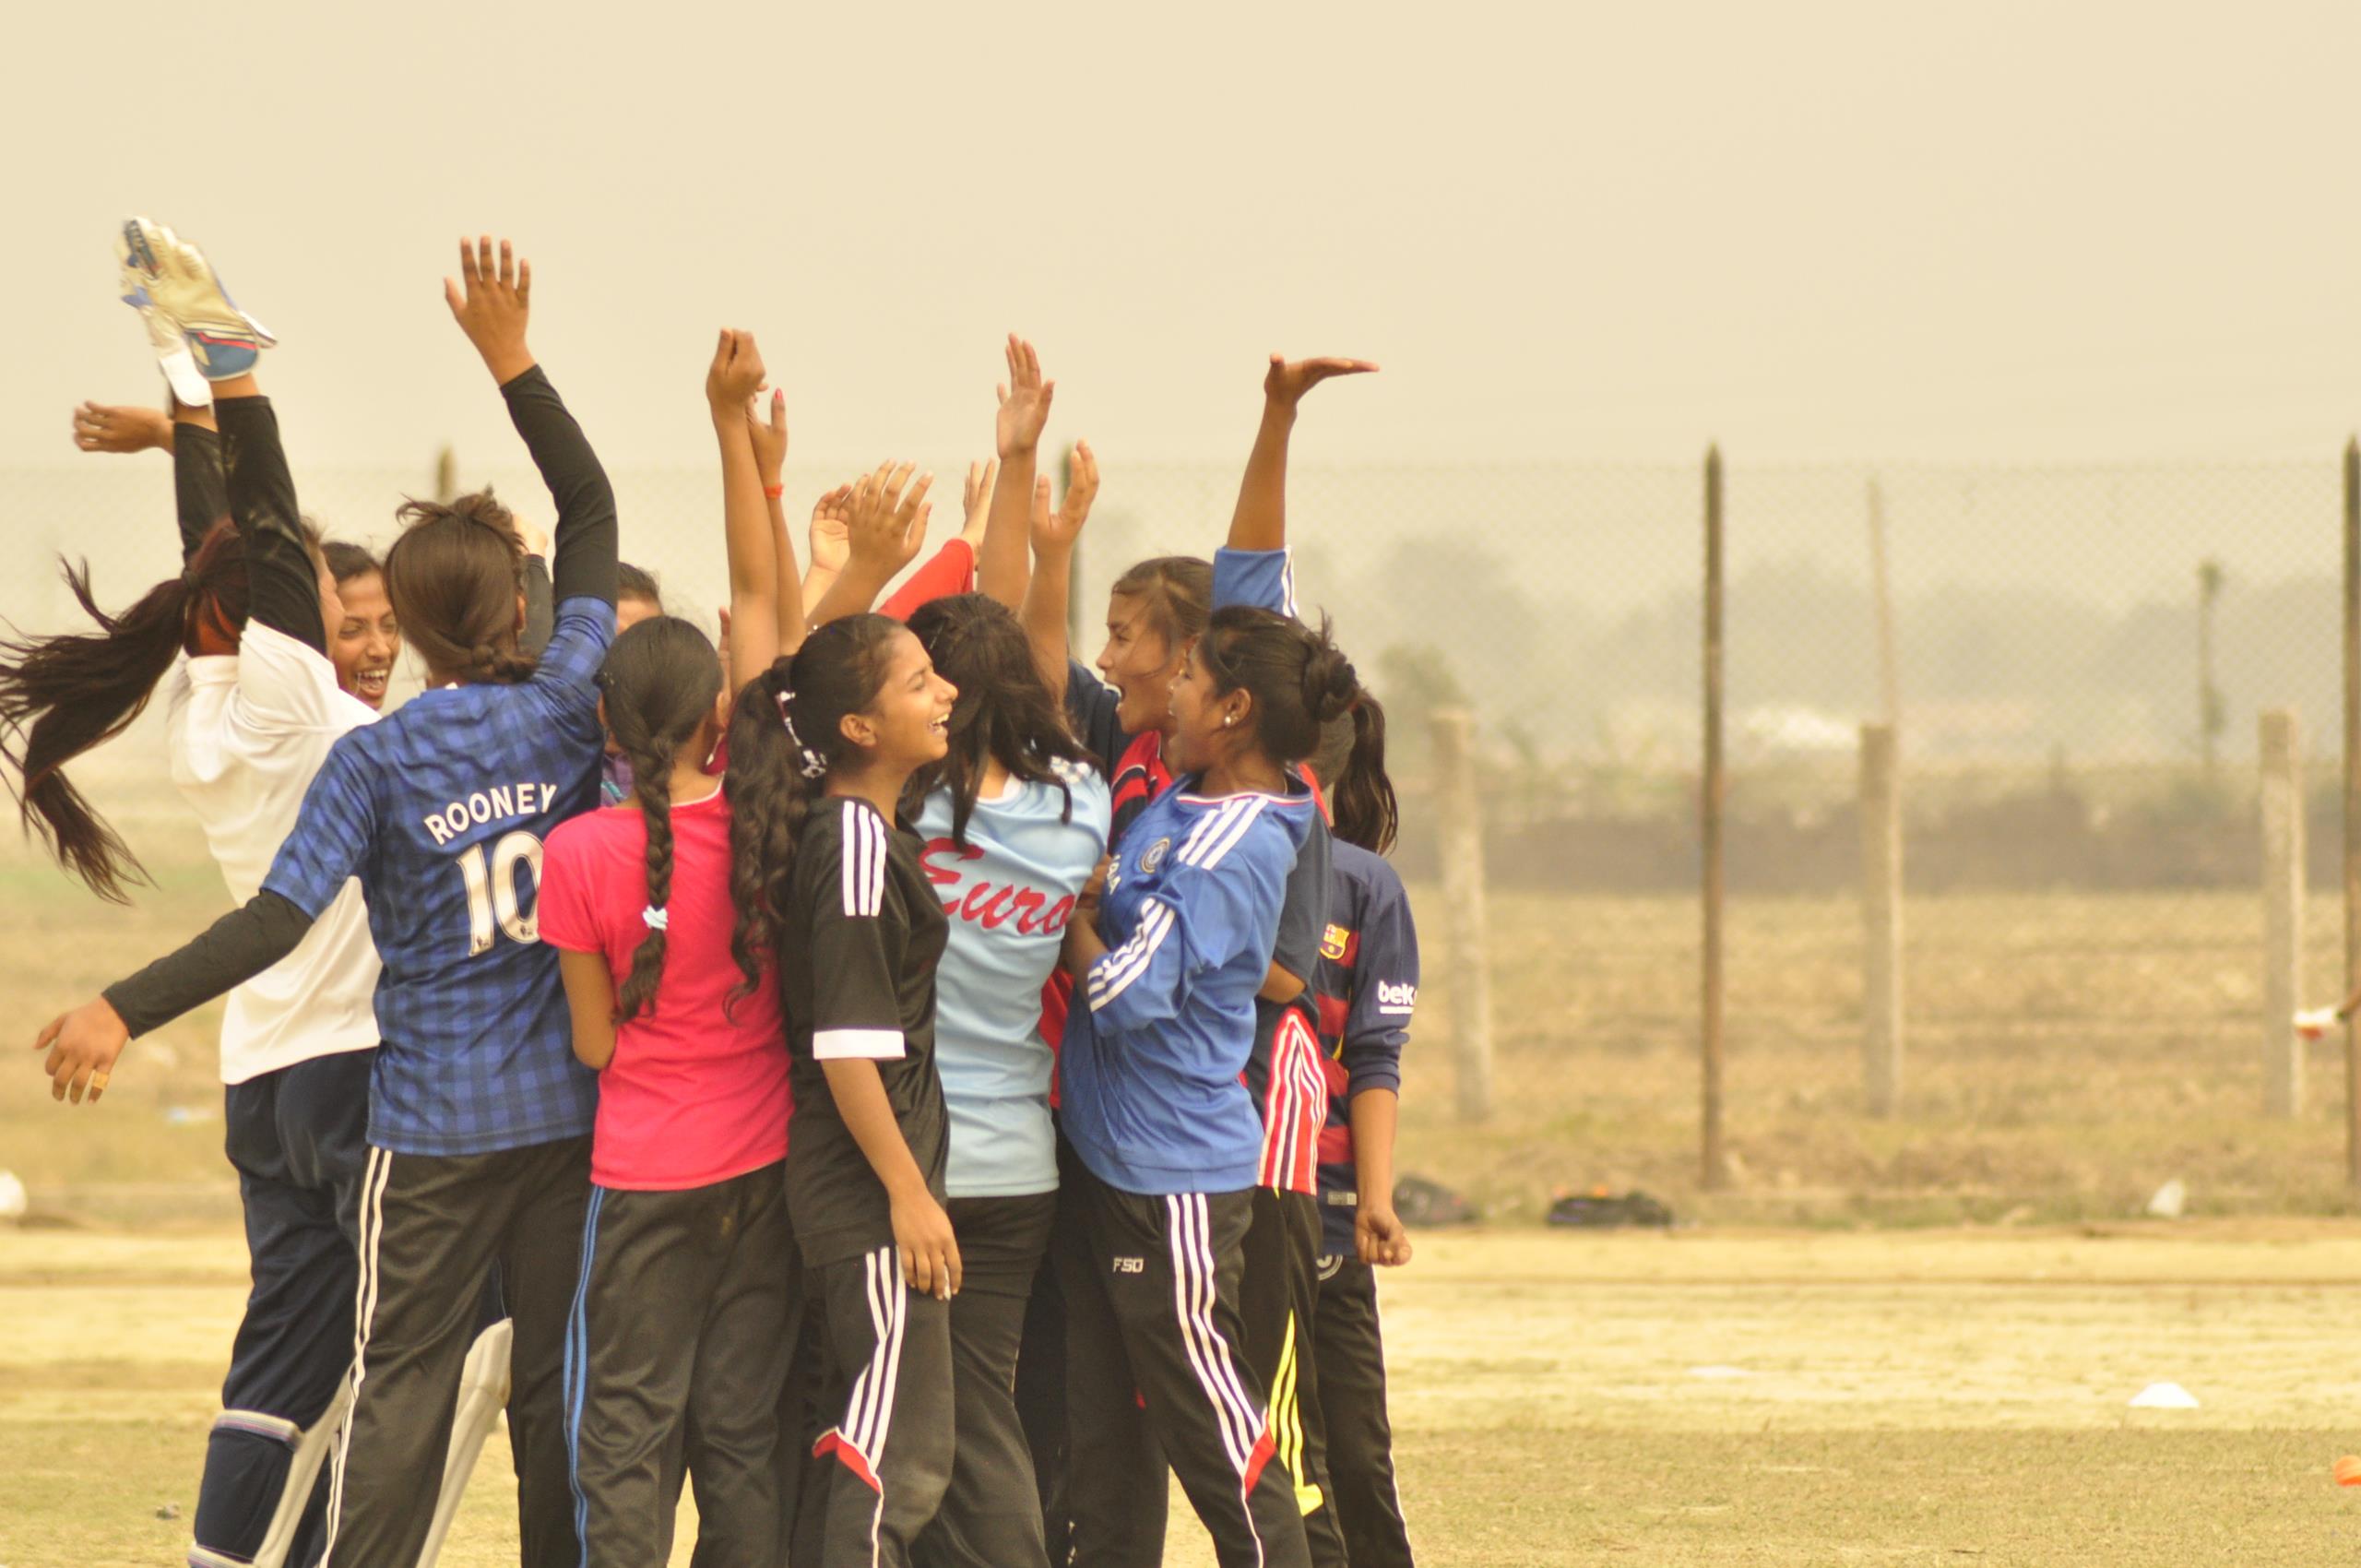 Girls celebrating after a cricket match